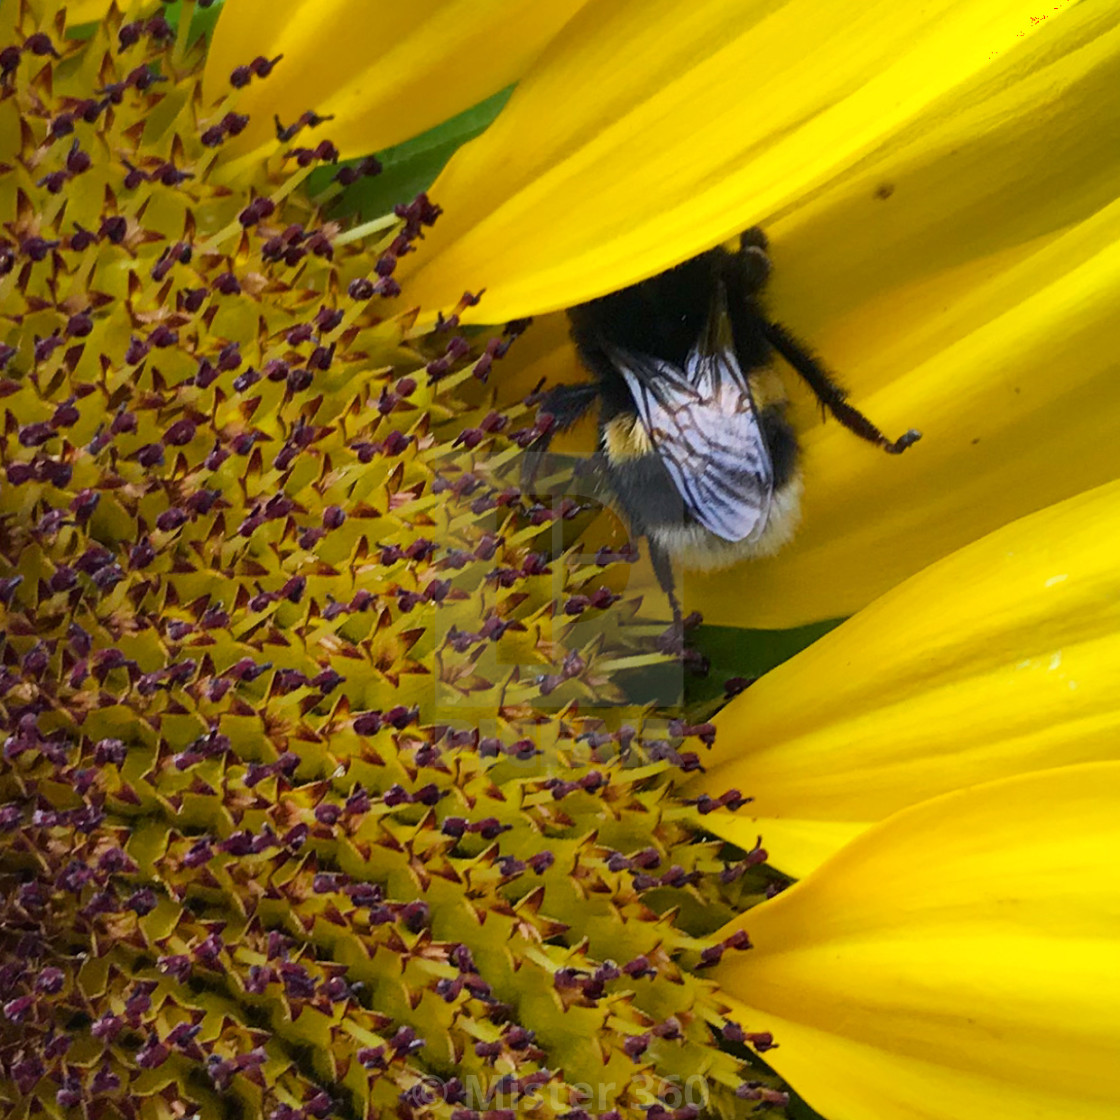 "Bee hiding in sunflower" stock image